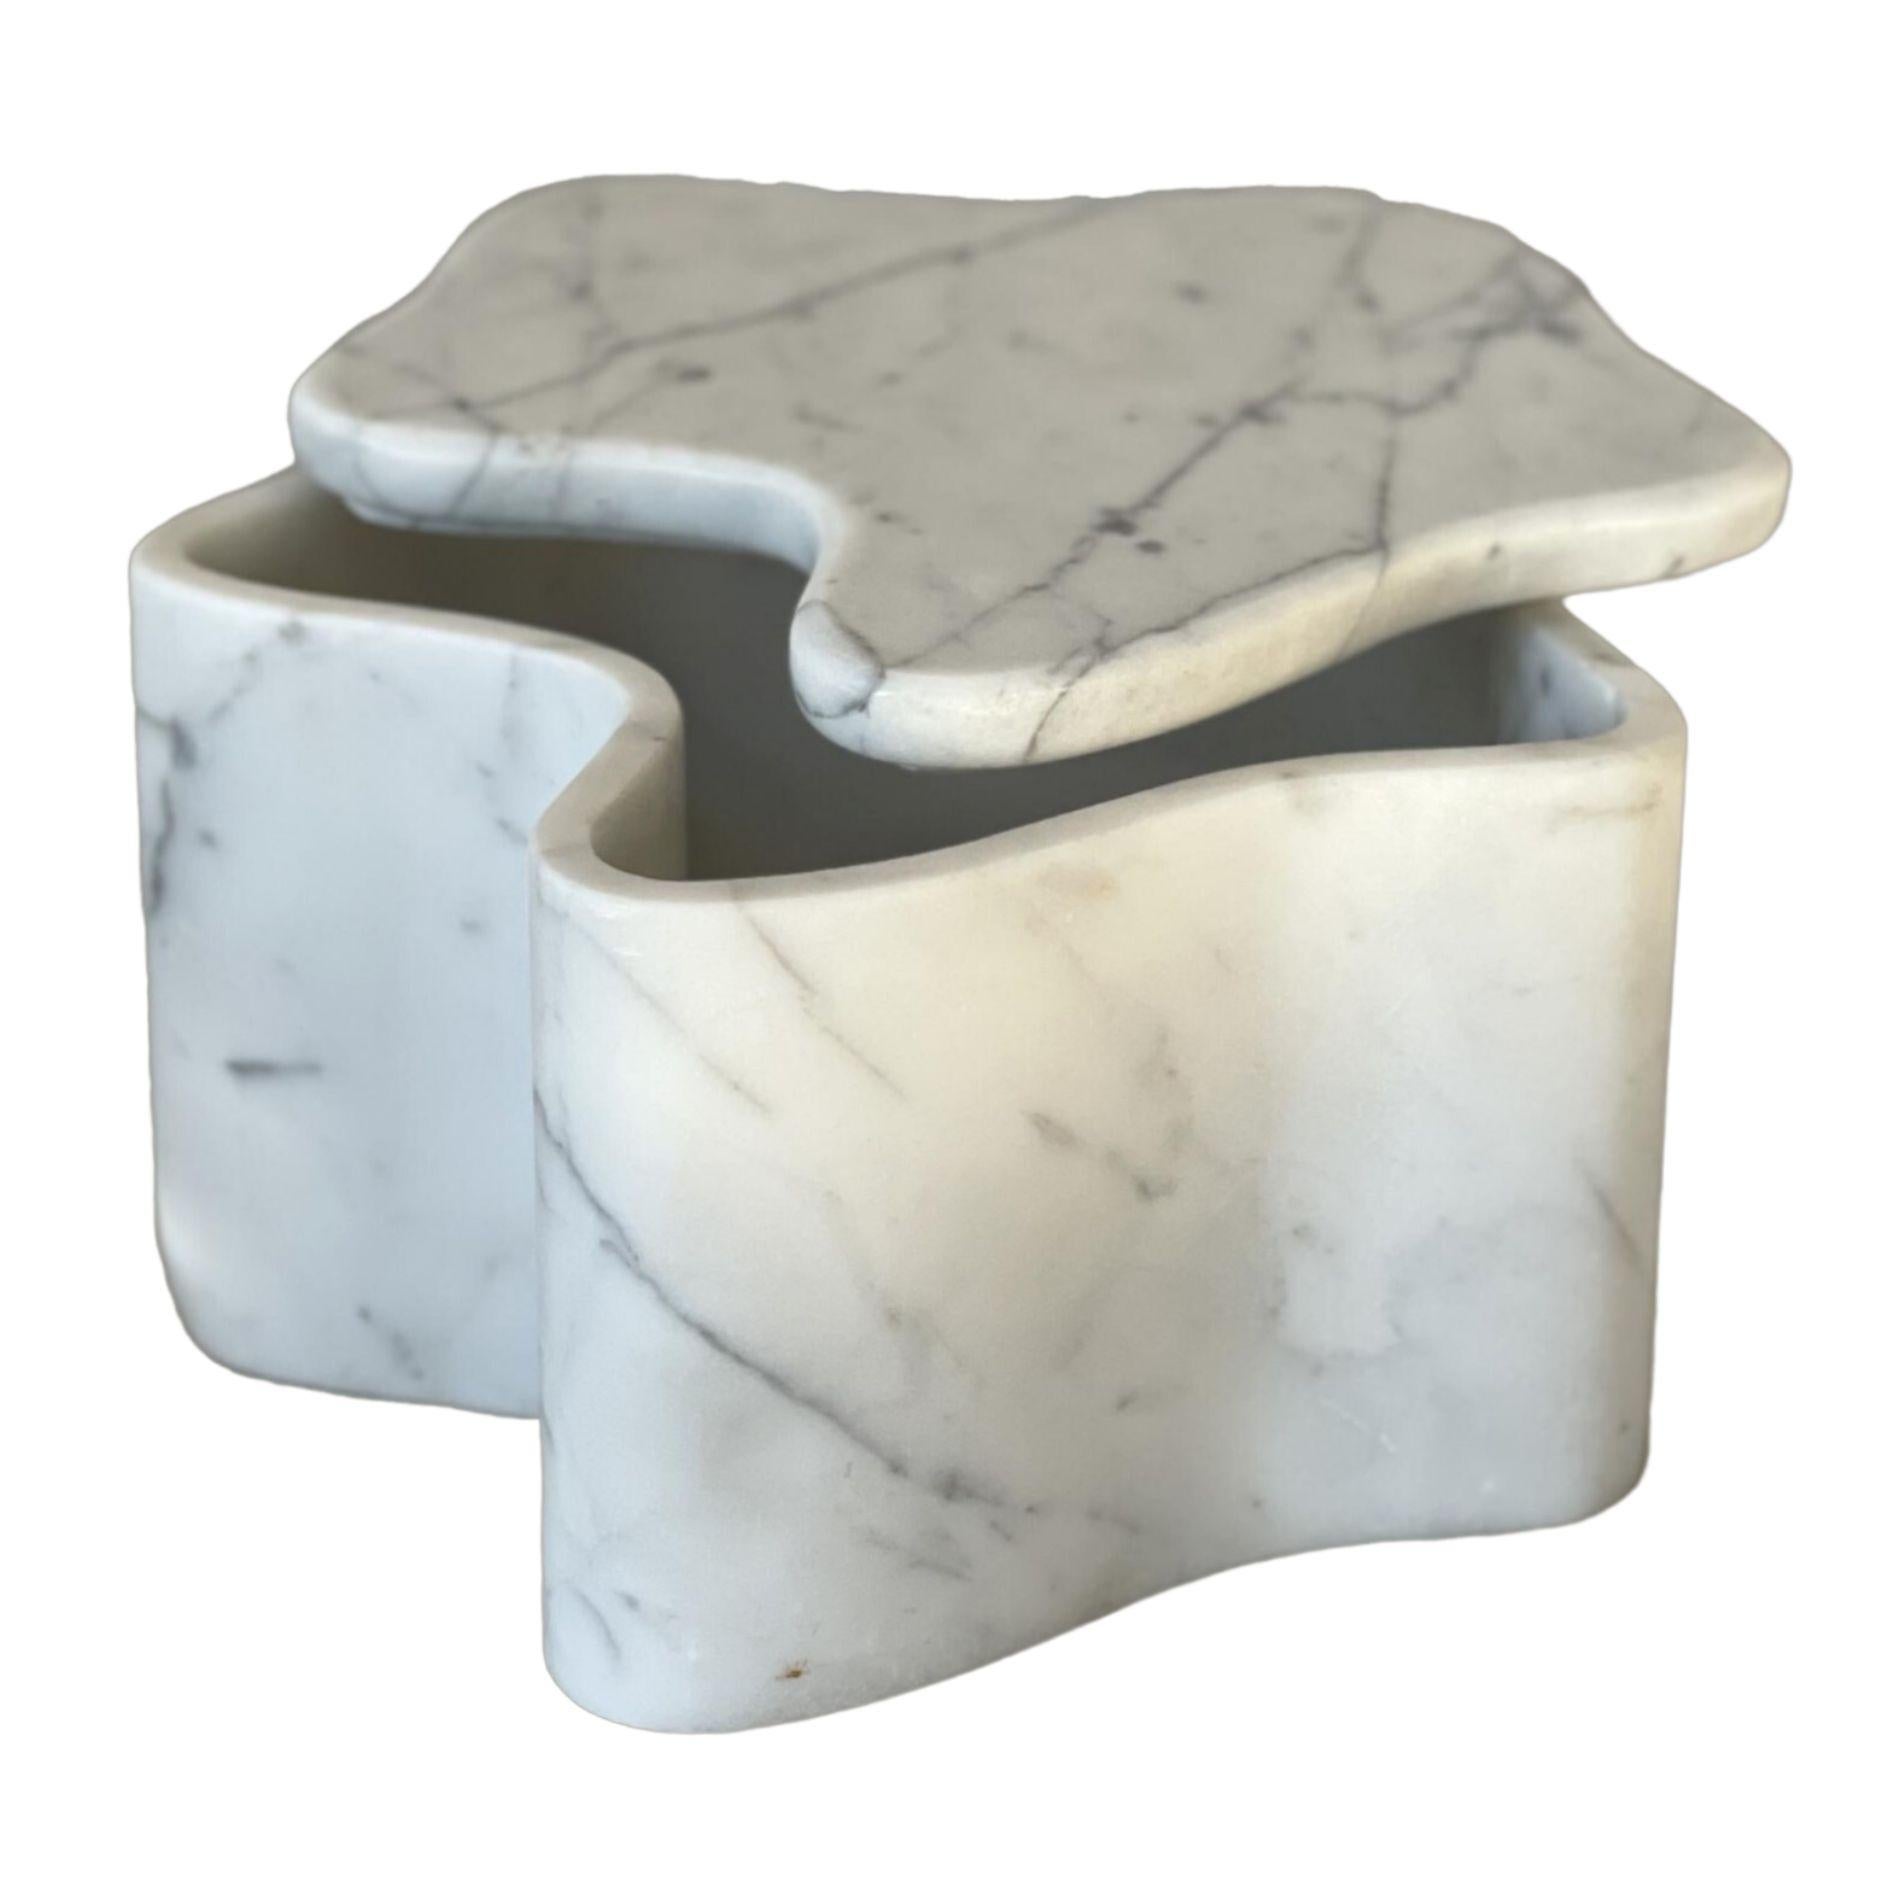 Organic Modern Flo Box: Organic Lidded Box in Cloud Marble by Anastasio Home For Sale